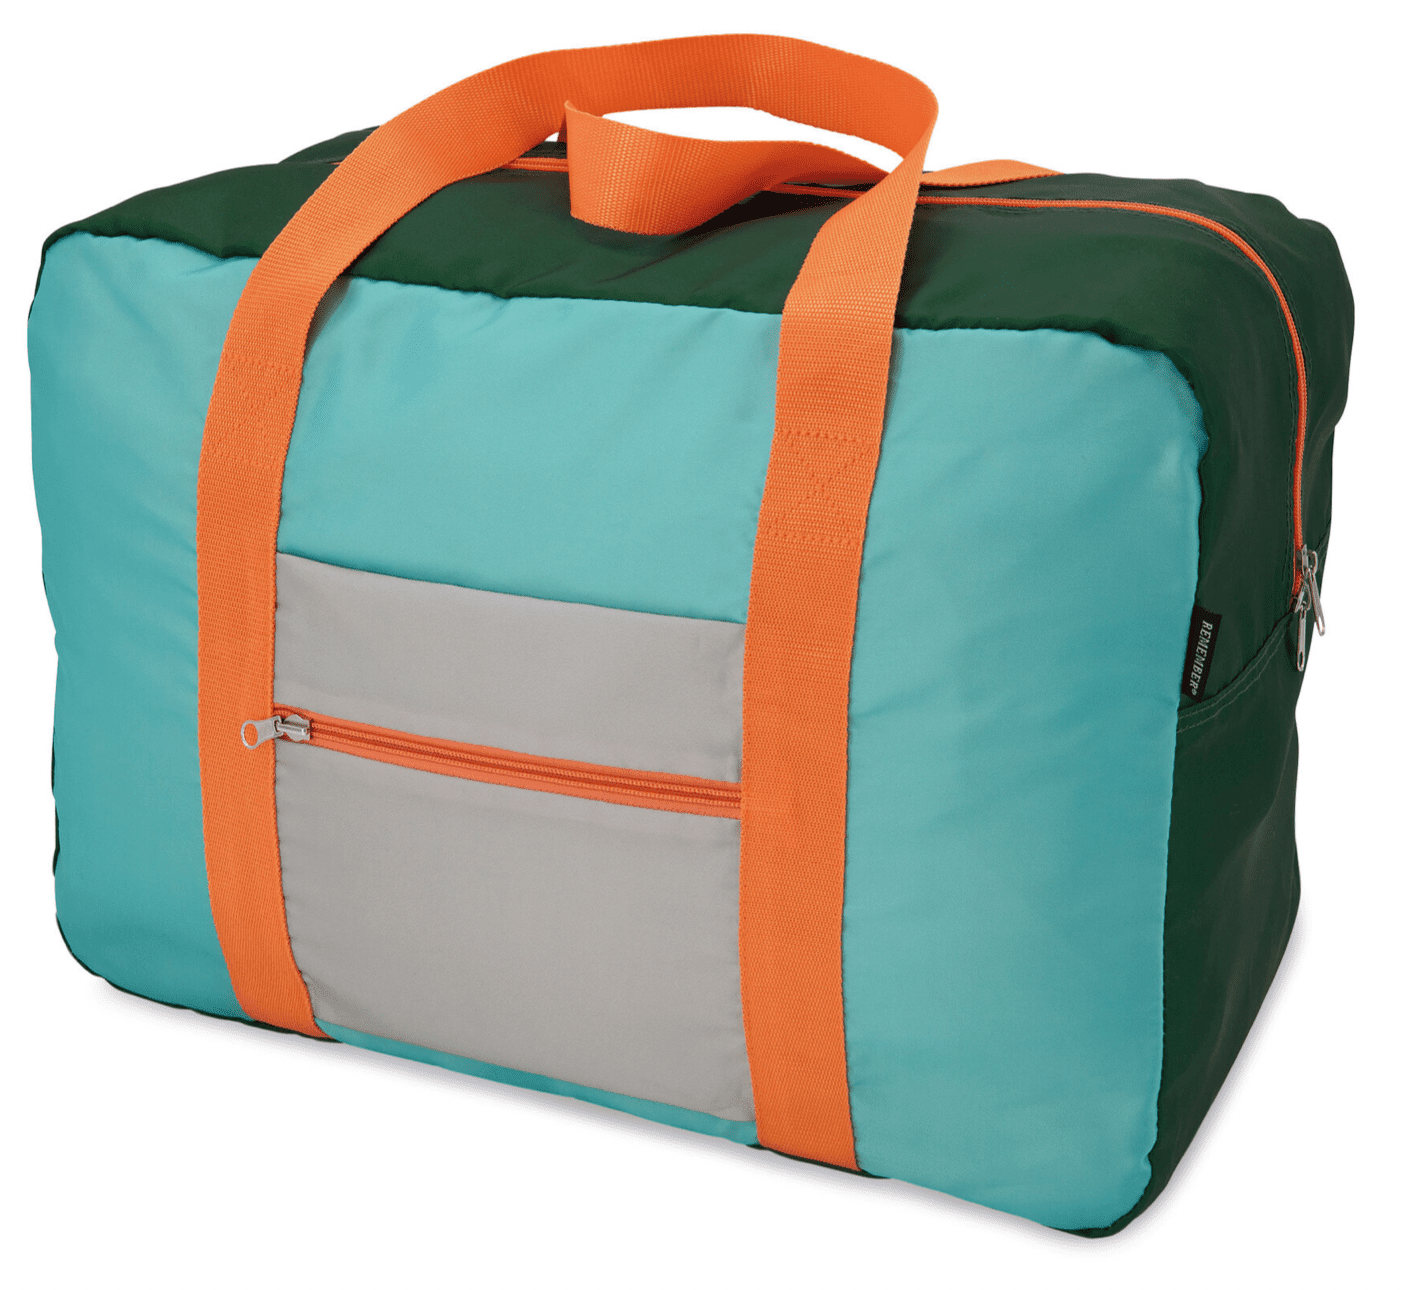 Remember Travel Duffle Bag in Green